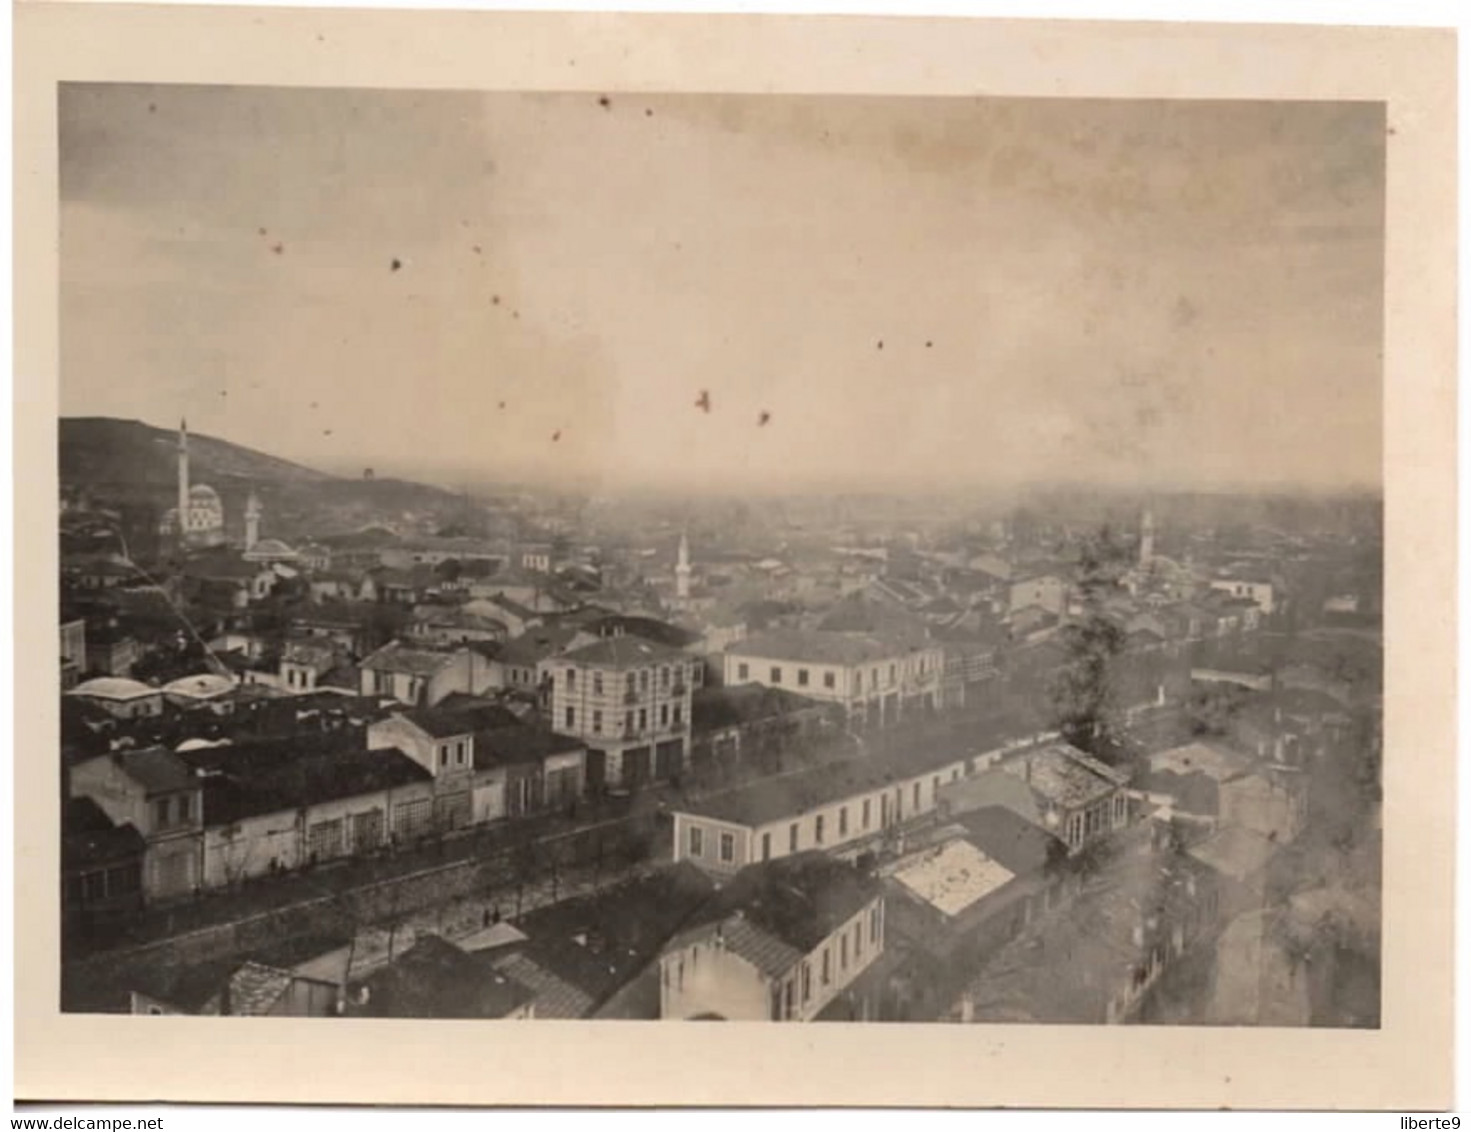 Bitola 1917 Photo 11x8cm Monastir - Plaatsen